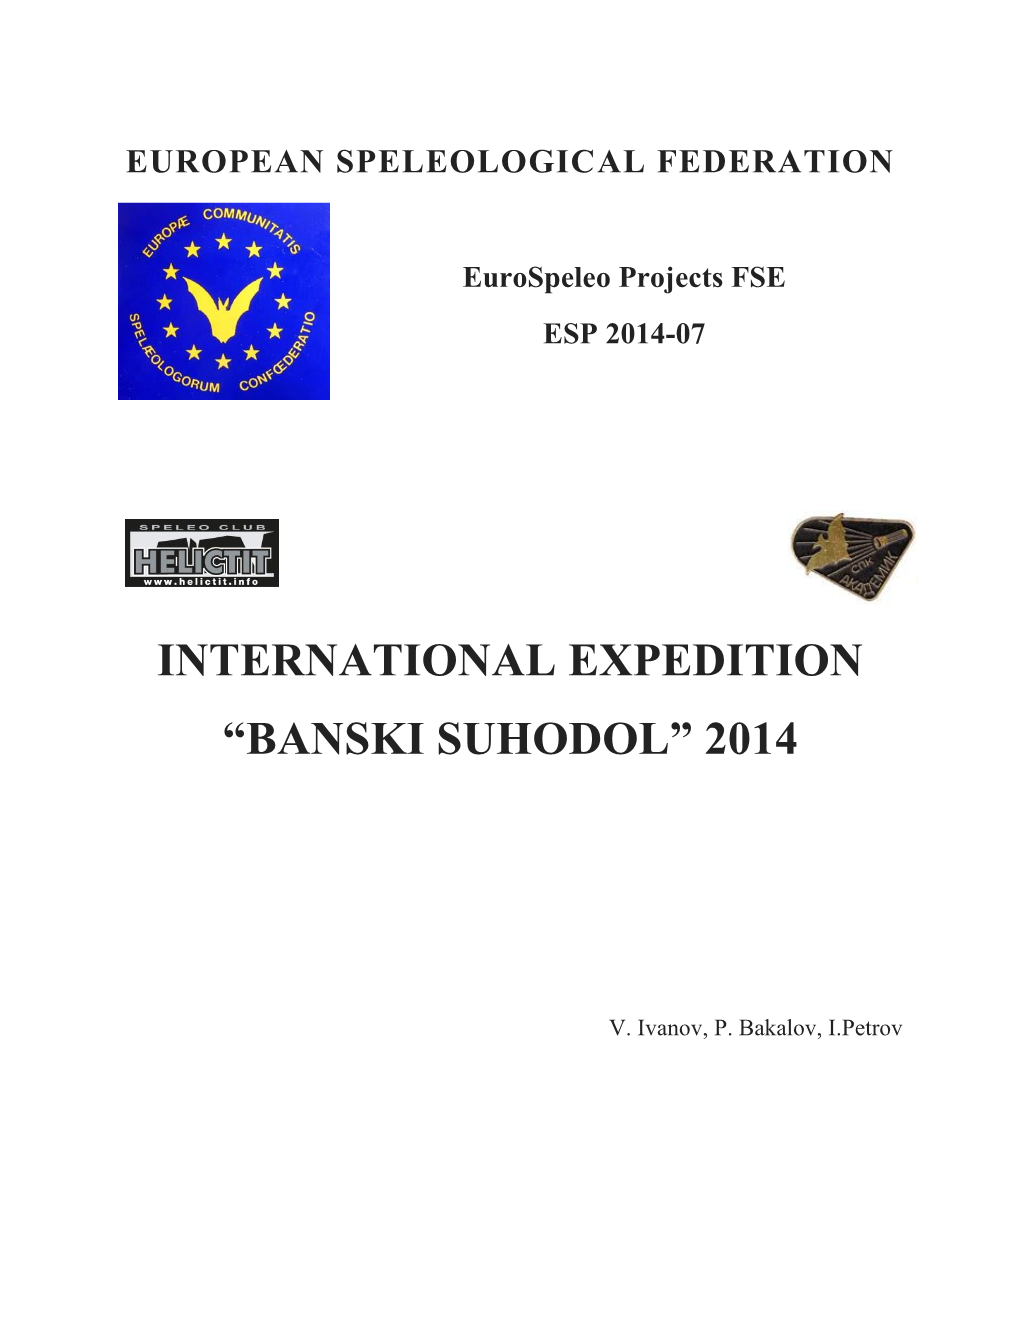 International Expedition “Banski Suhodol” 2014 Finished Successfully